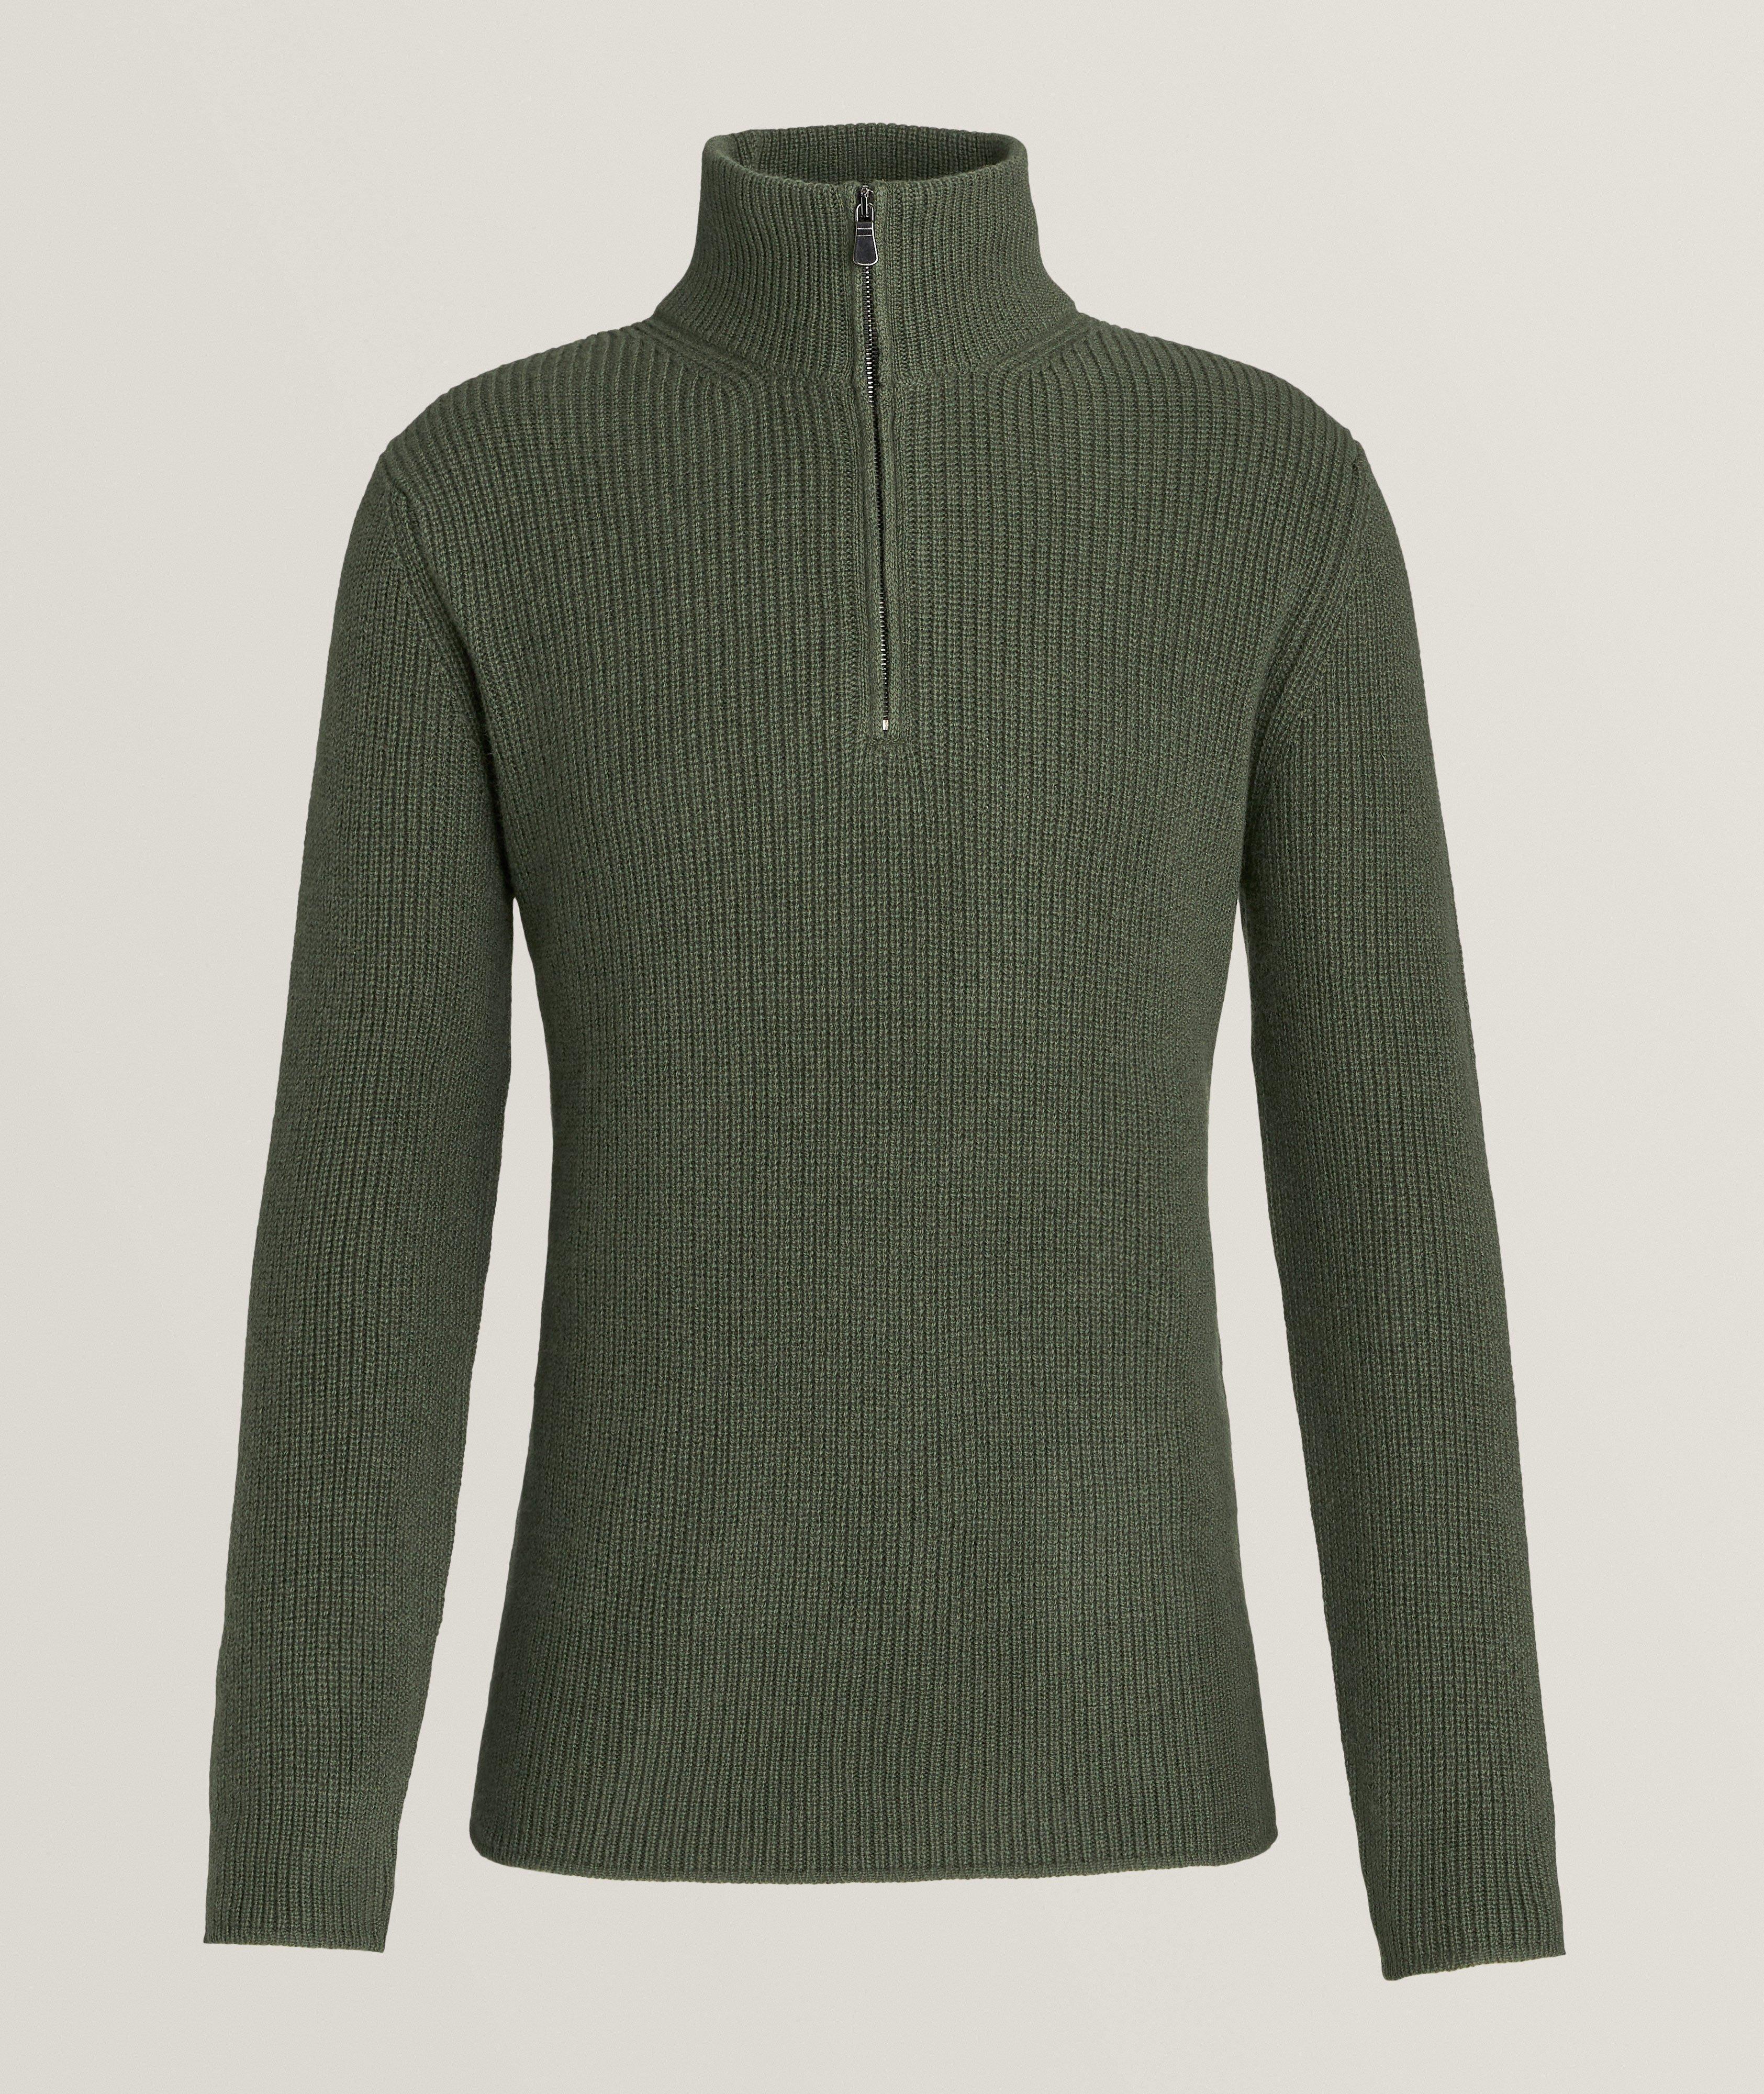 Superfine 120s Merino Wool-Cashmere Knitted Sweater